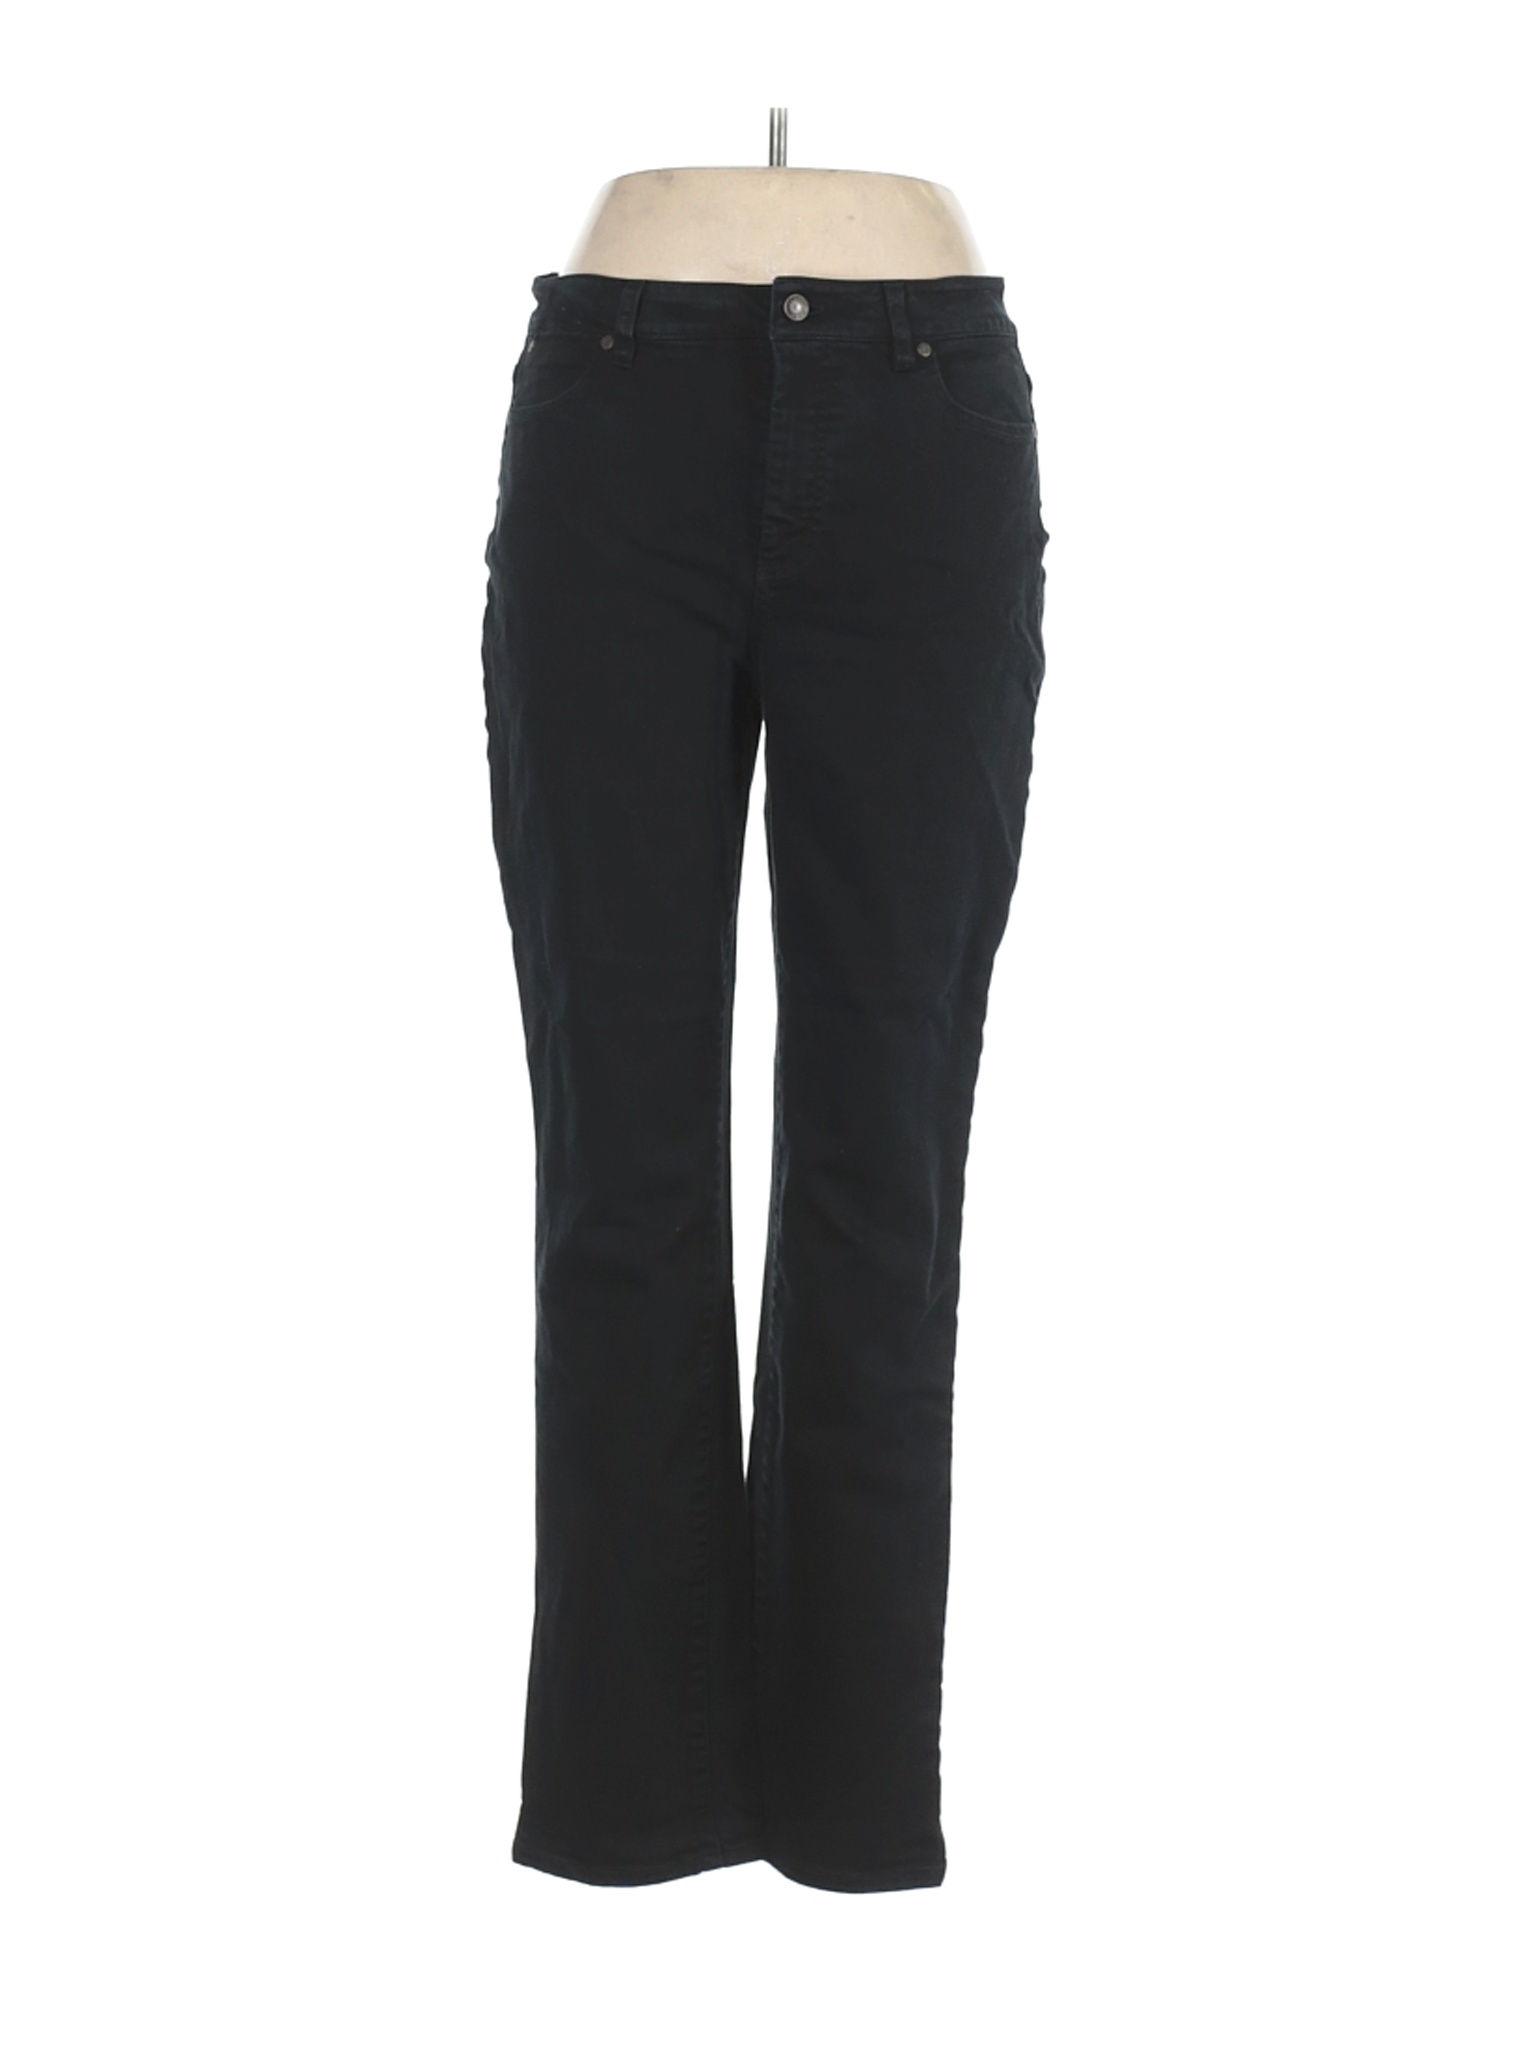 Talbots Women Black Jeans 12 | eBay